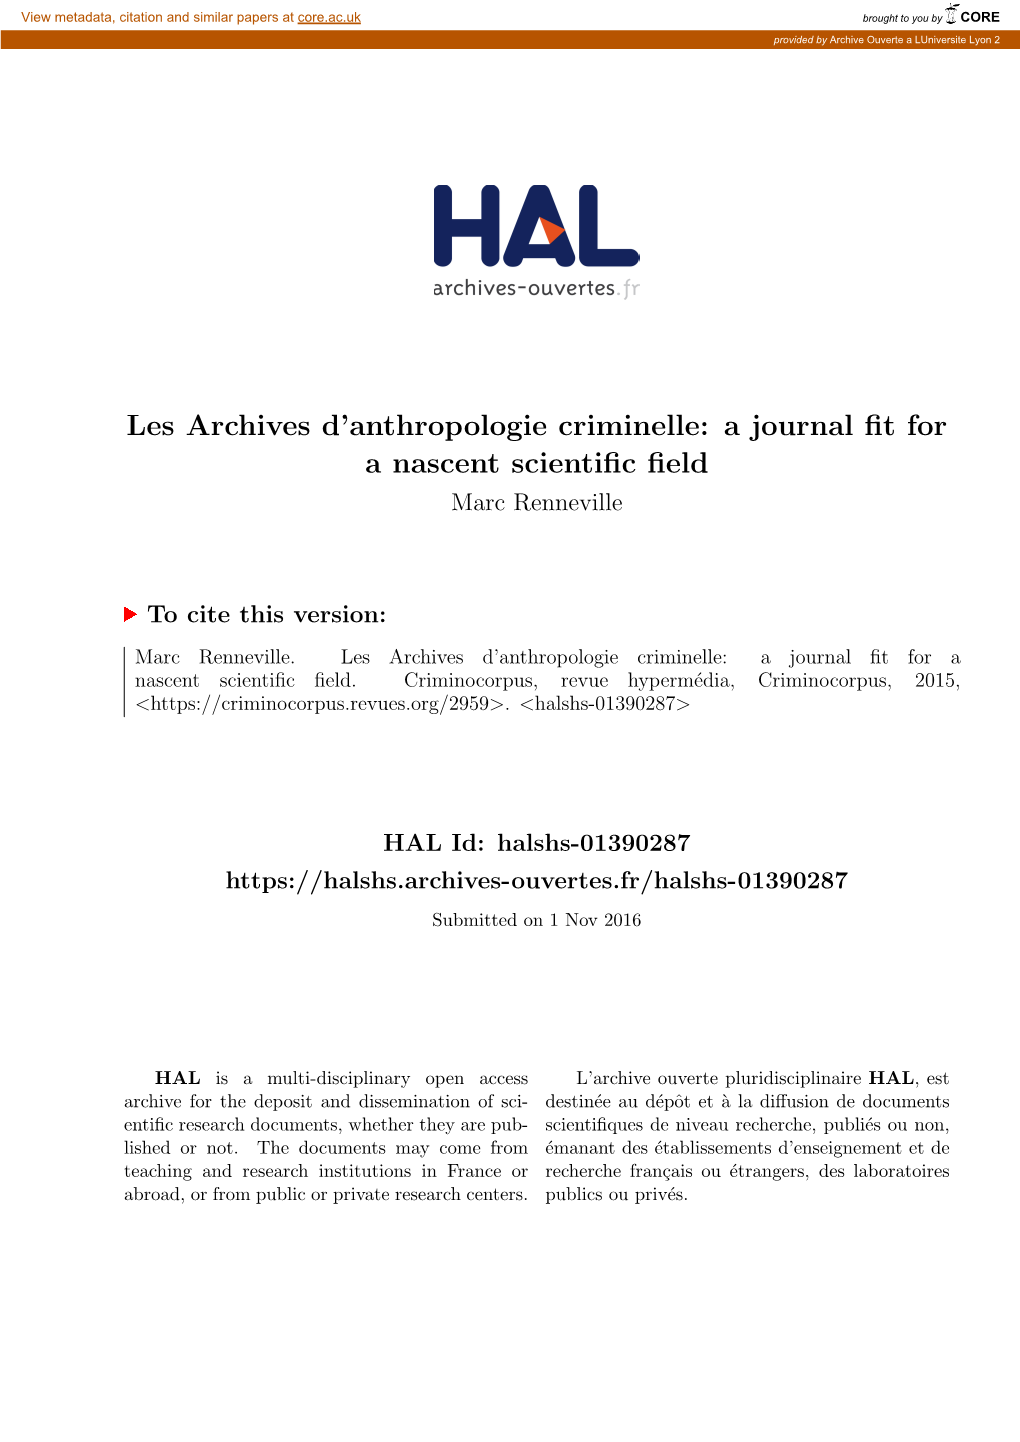 Les Archives D'anthropologie Criminelle: a Journal Fit for A